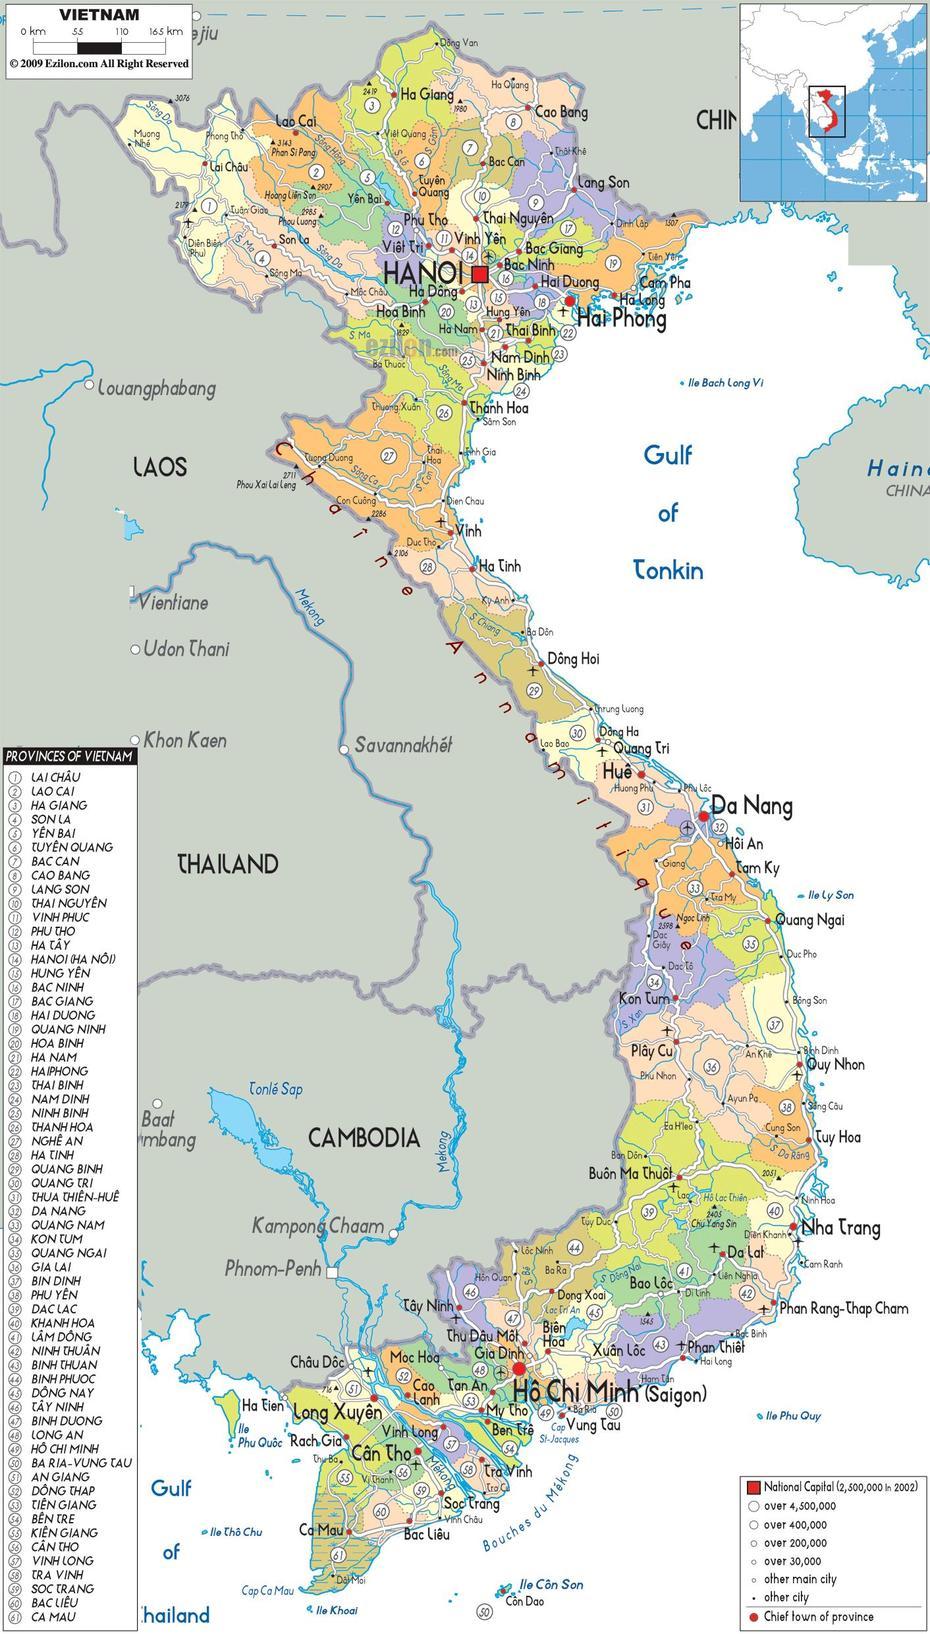 Detailed Political Map Of Vietnam – Ezilon Maps, Di Linh, Vietnam, Ninh Binh, Long Binh Vietnam